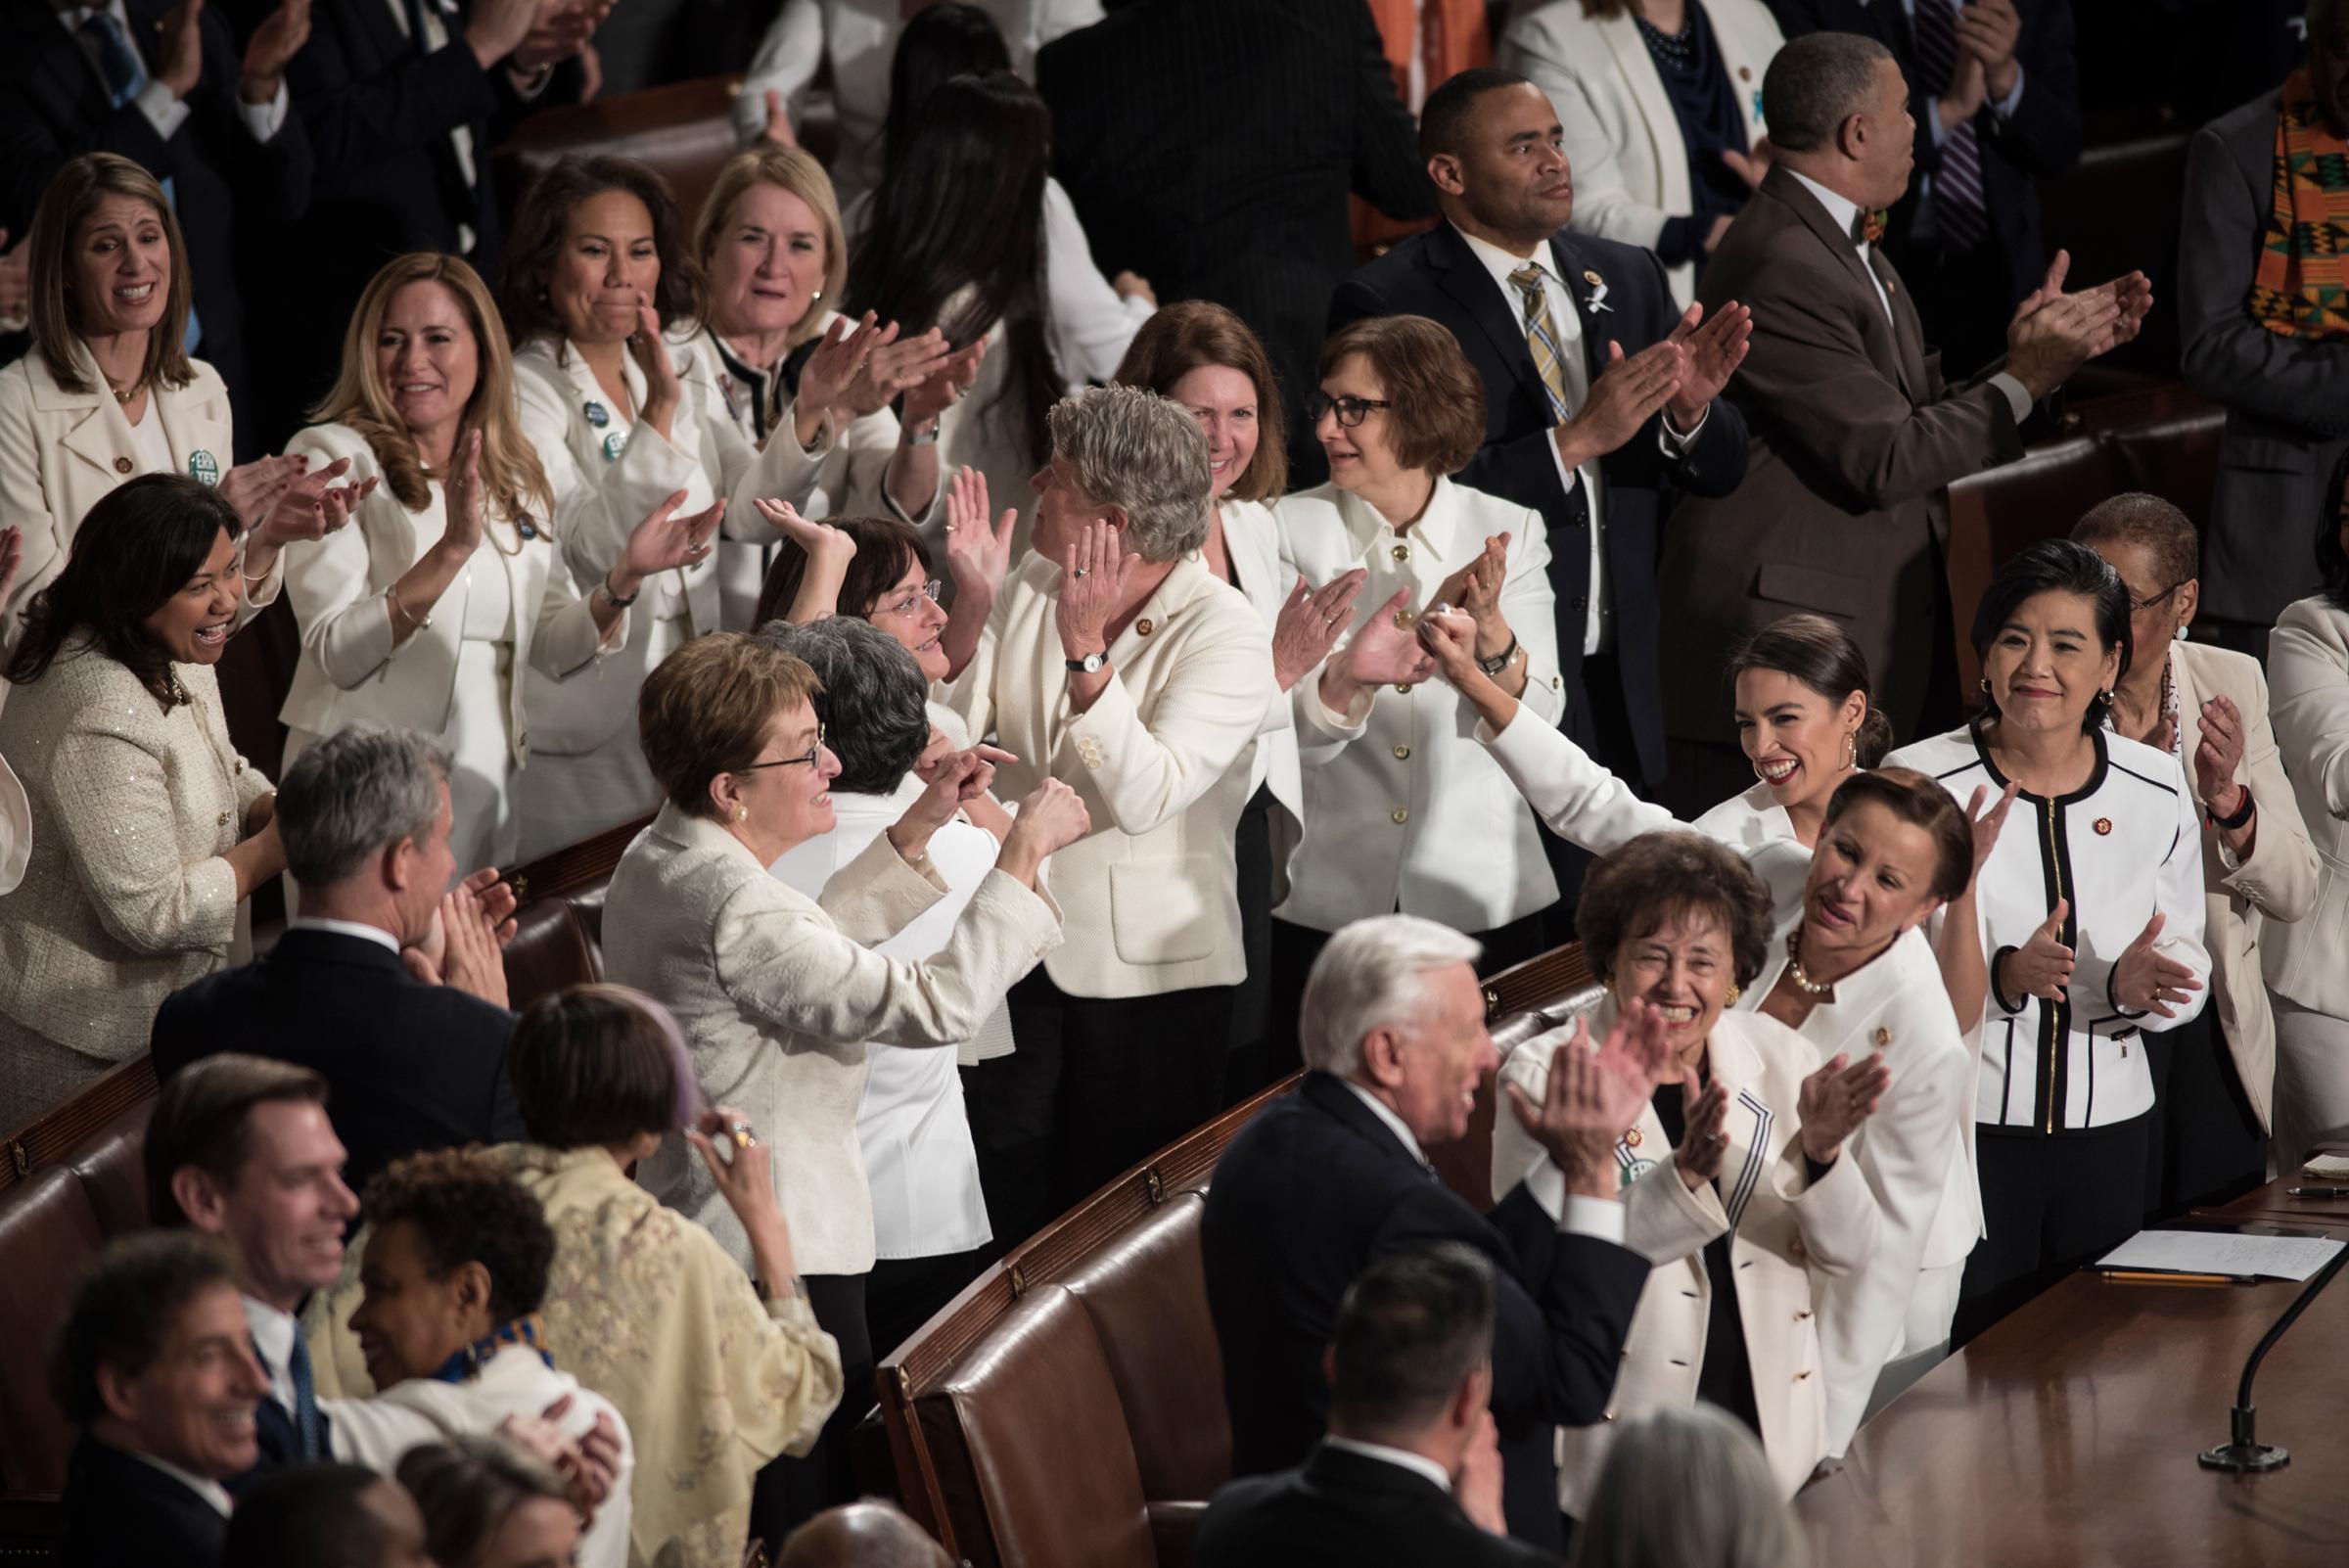 Congresswomen dressed in white in solidarity.